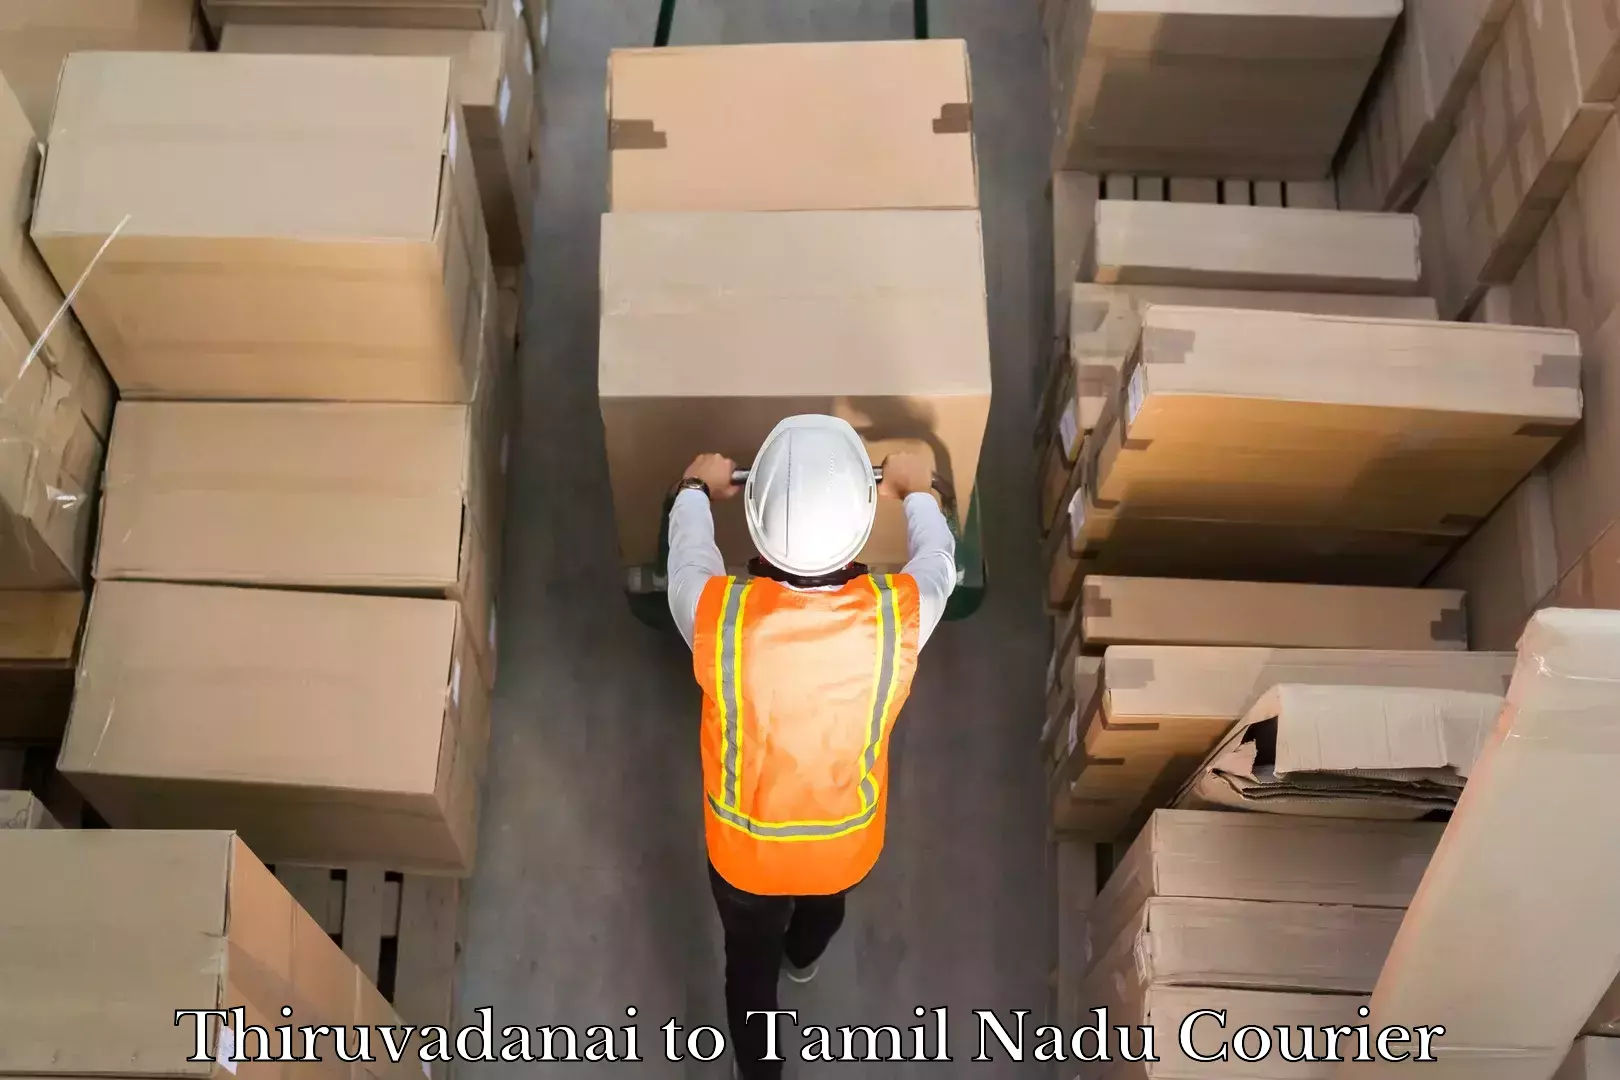 Logistics service provider Thiruvadanai to Tamil Nadu